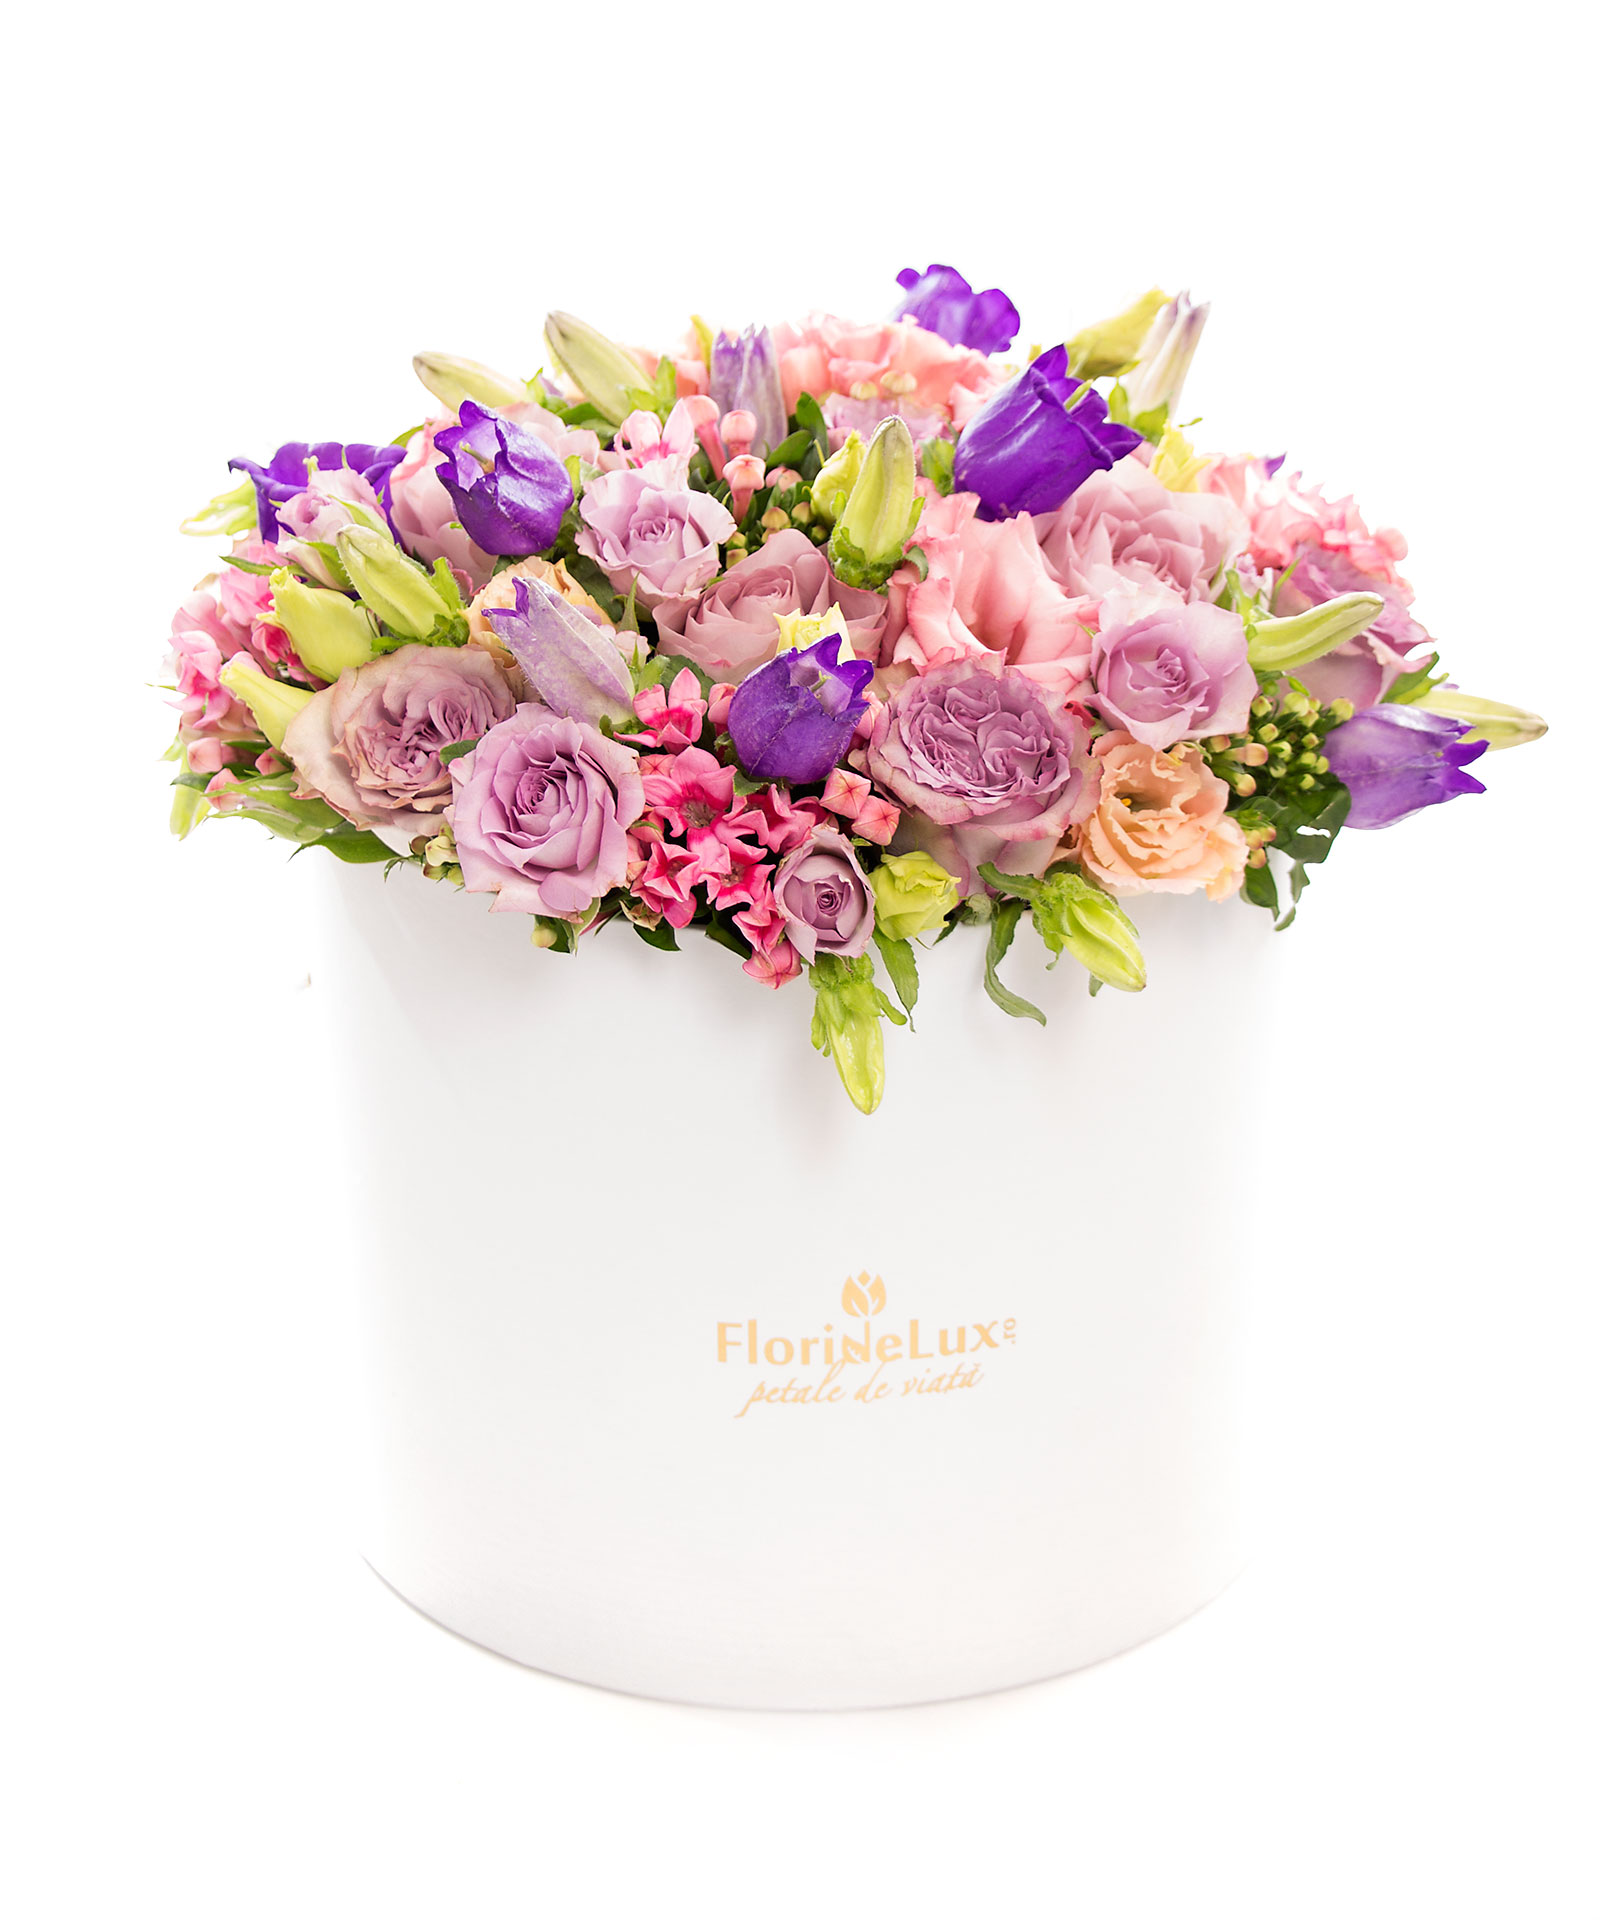 Cutie magnifica cu flori multicolore si Chimney Rock